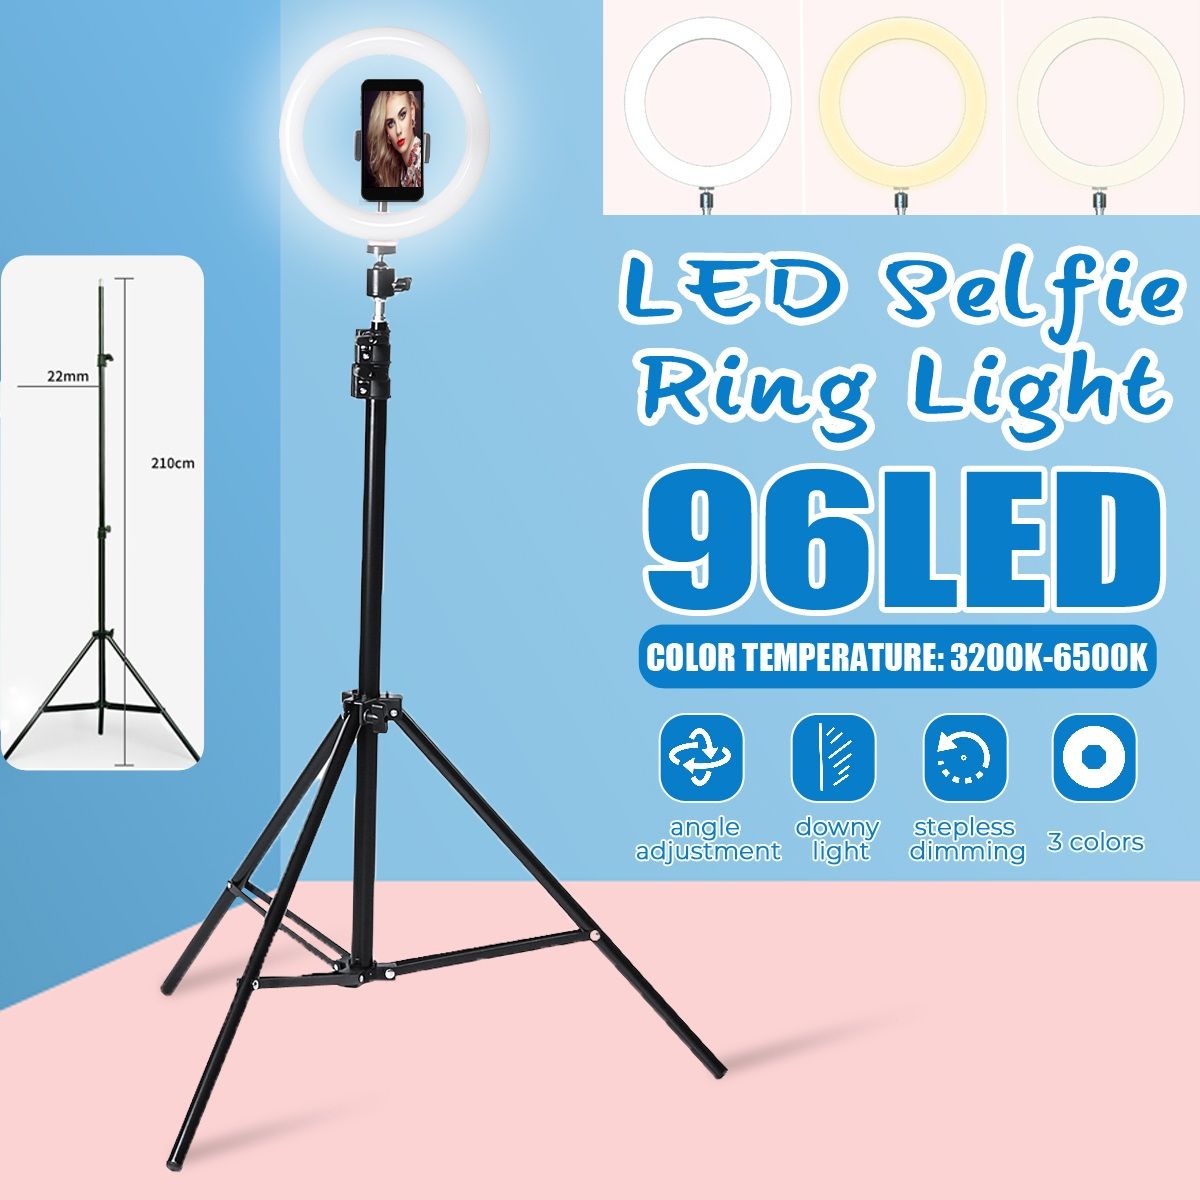 96-LED-Ring-Light-3-Colors-6500K-Studio-Photography-Photo-Selfie-Fill-Light-for-iPhone-Smartphone-Yo-1697967